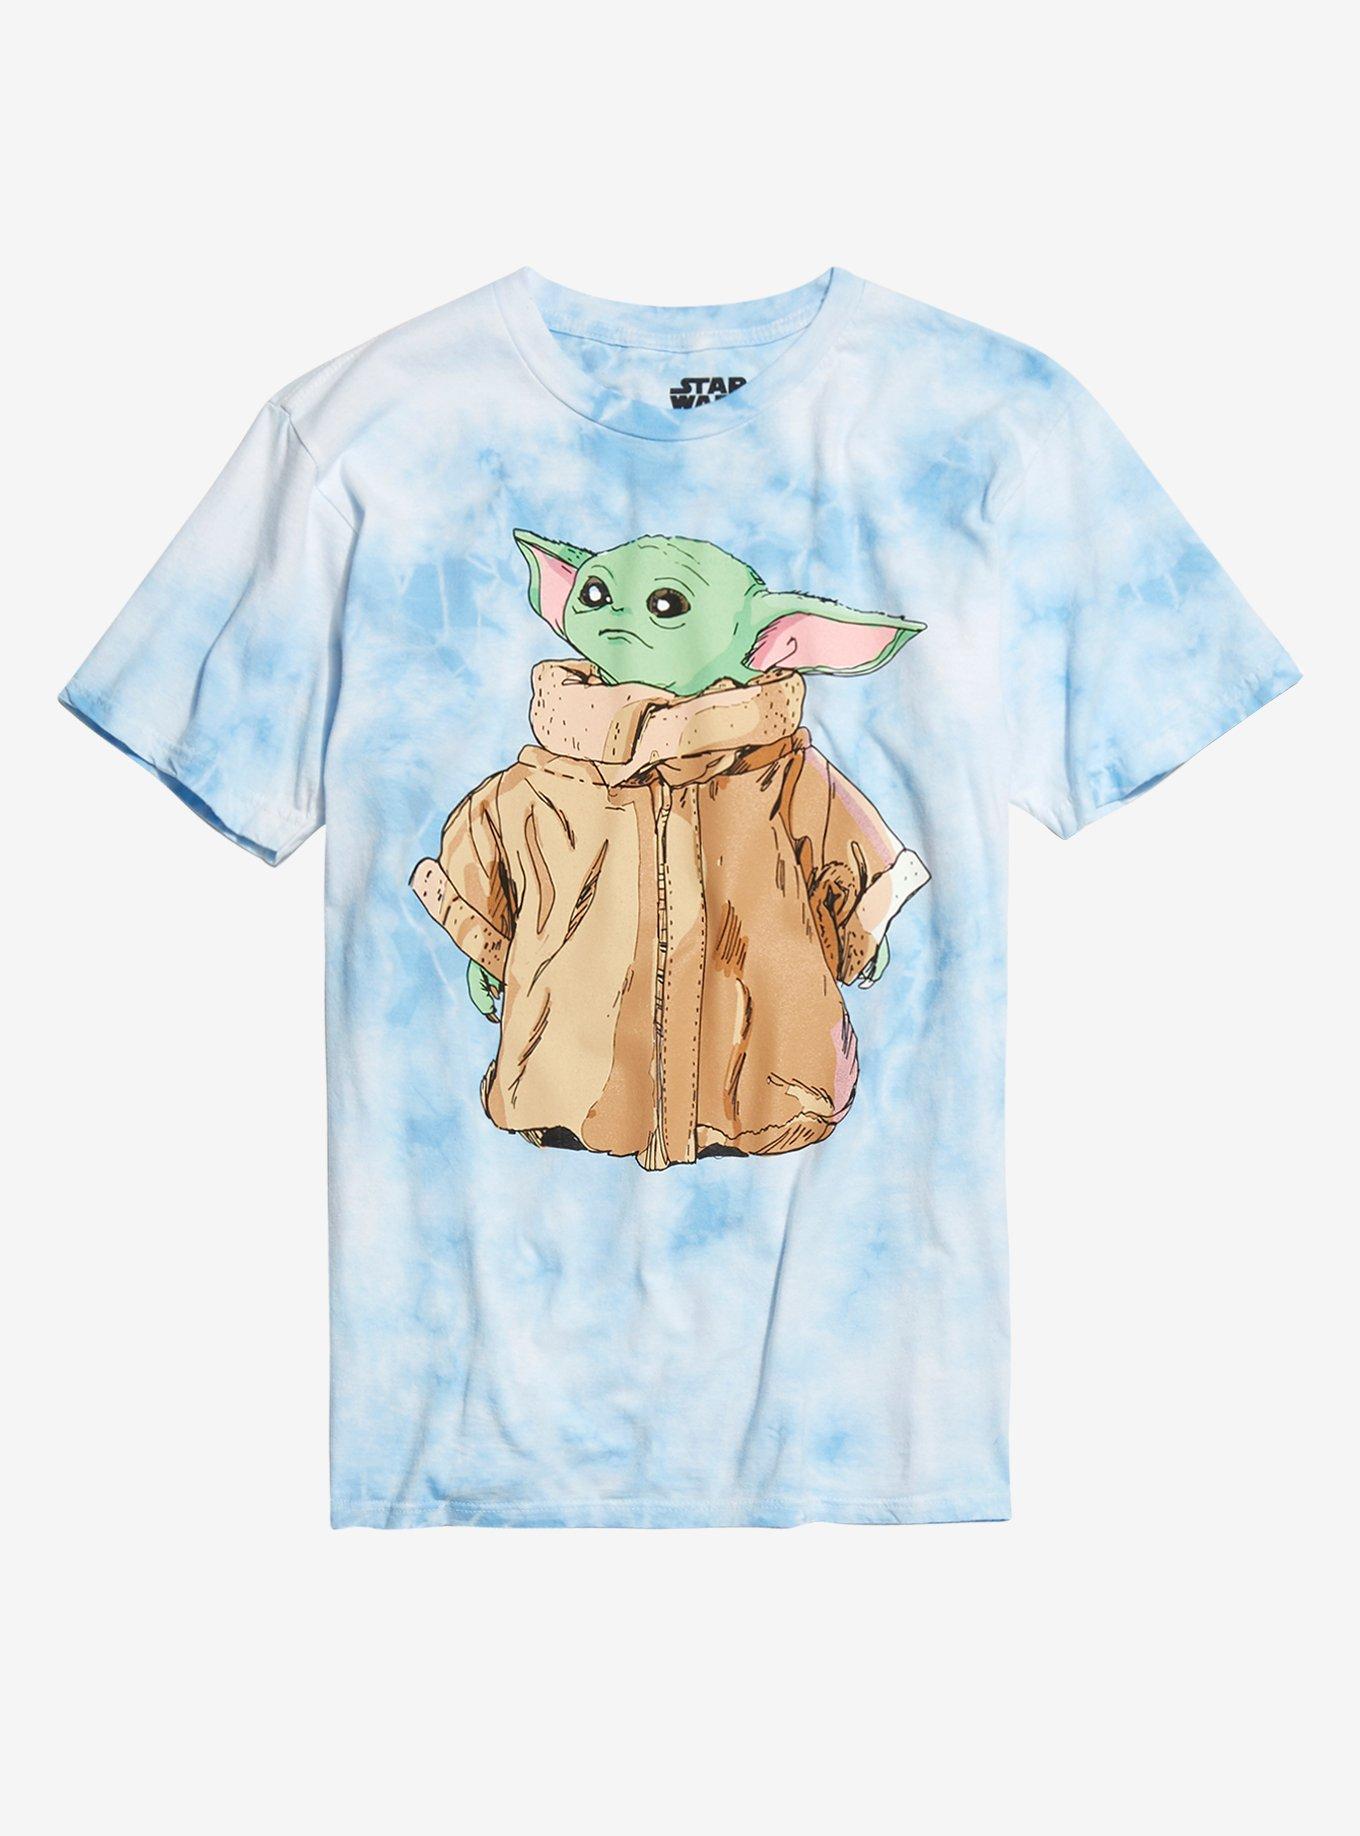 Star Wars The Mandalorian The Child Sketch Tie-Dye Boyfriend Fit Girls T-Shirt, MULTI, hi-res